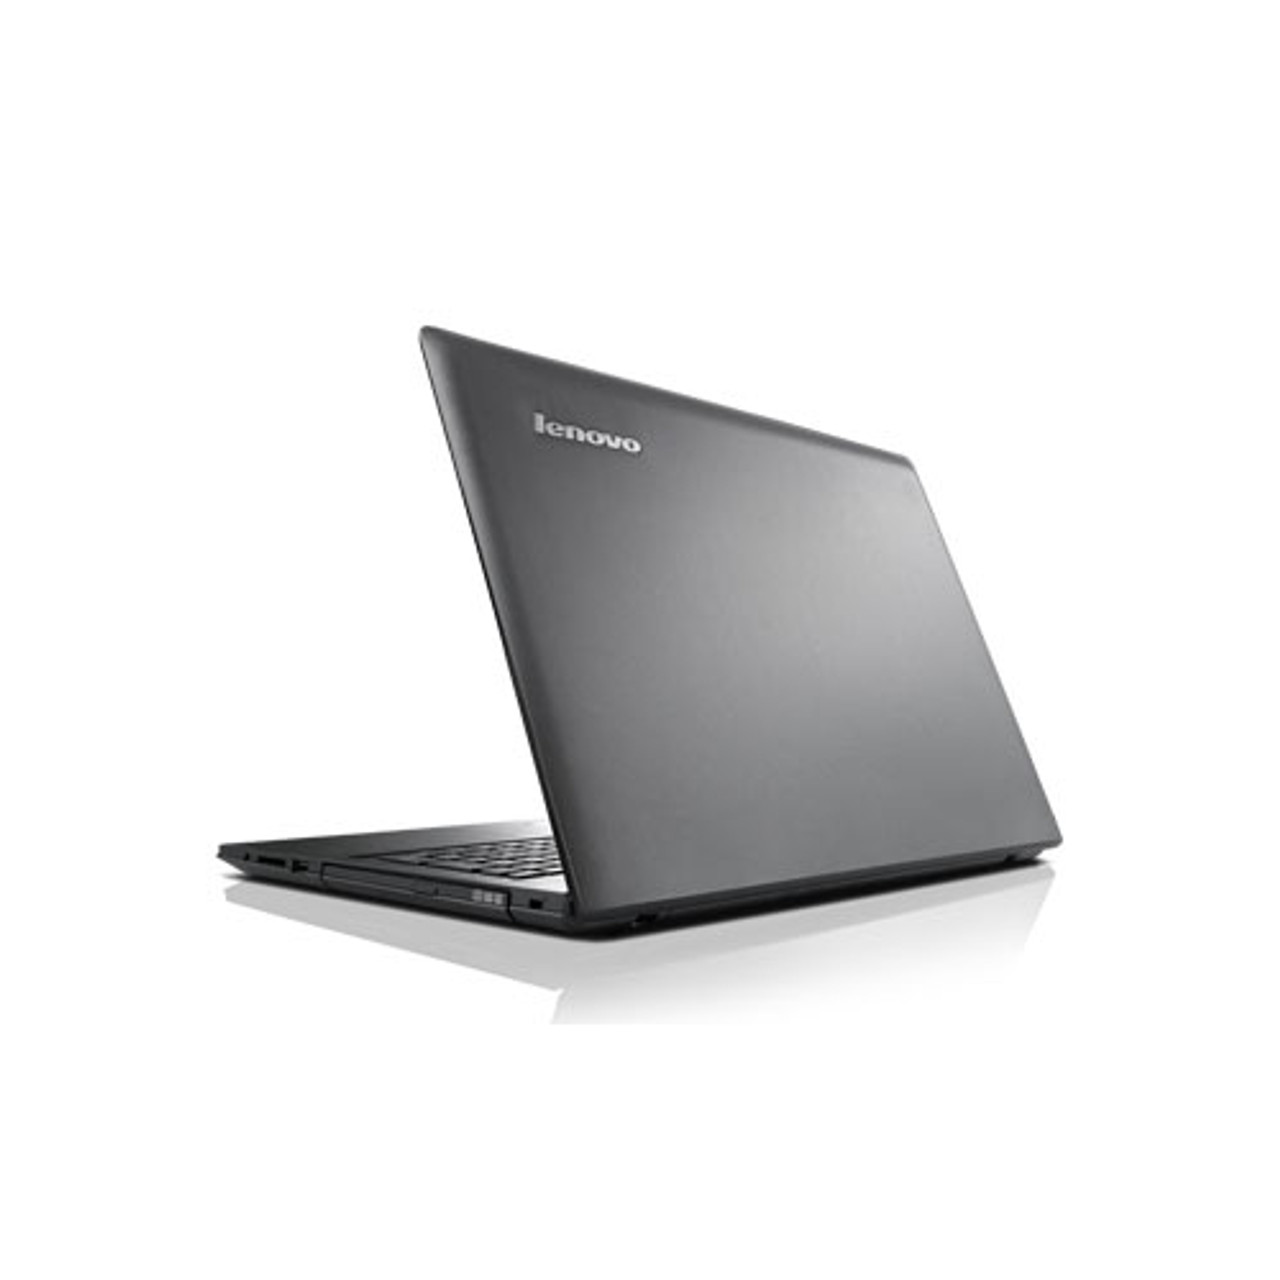 Lenovo Laptop Z50-70 4th Gen Intel Core i7 2.0GHz 16GB SSD Windows Pro Bluetooth